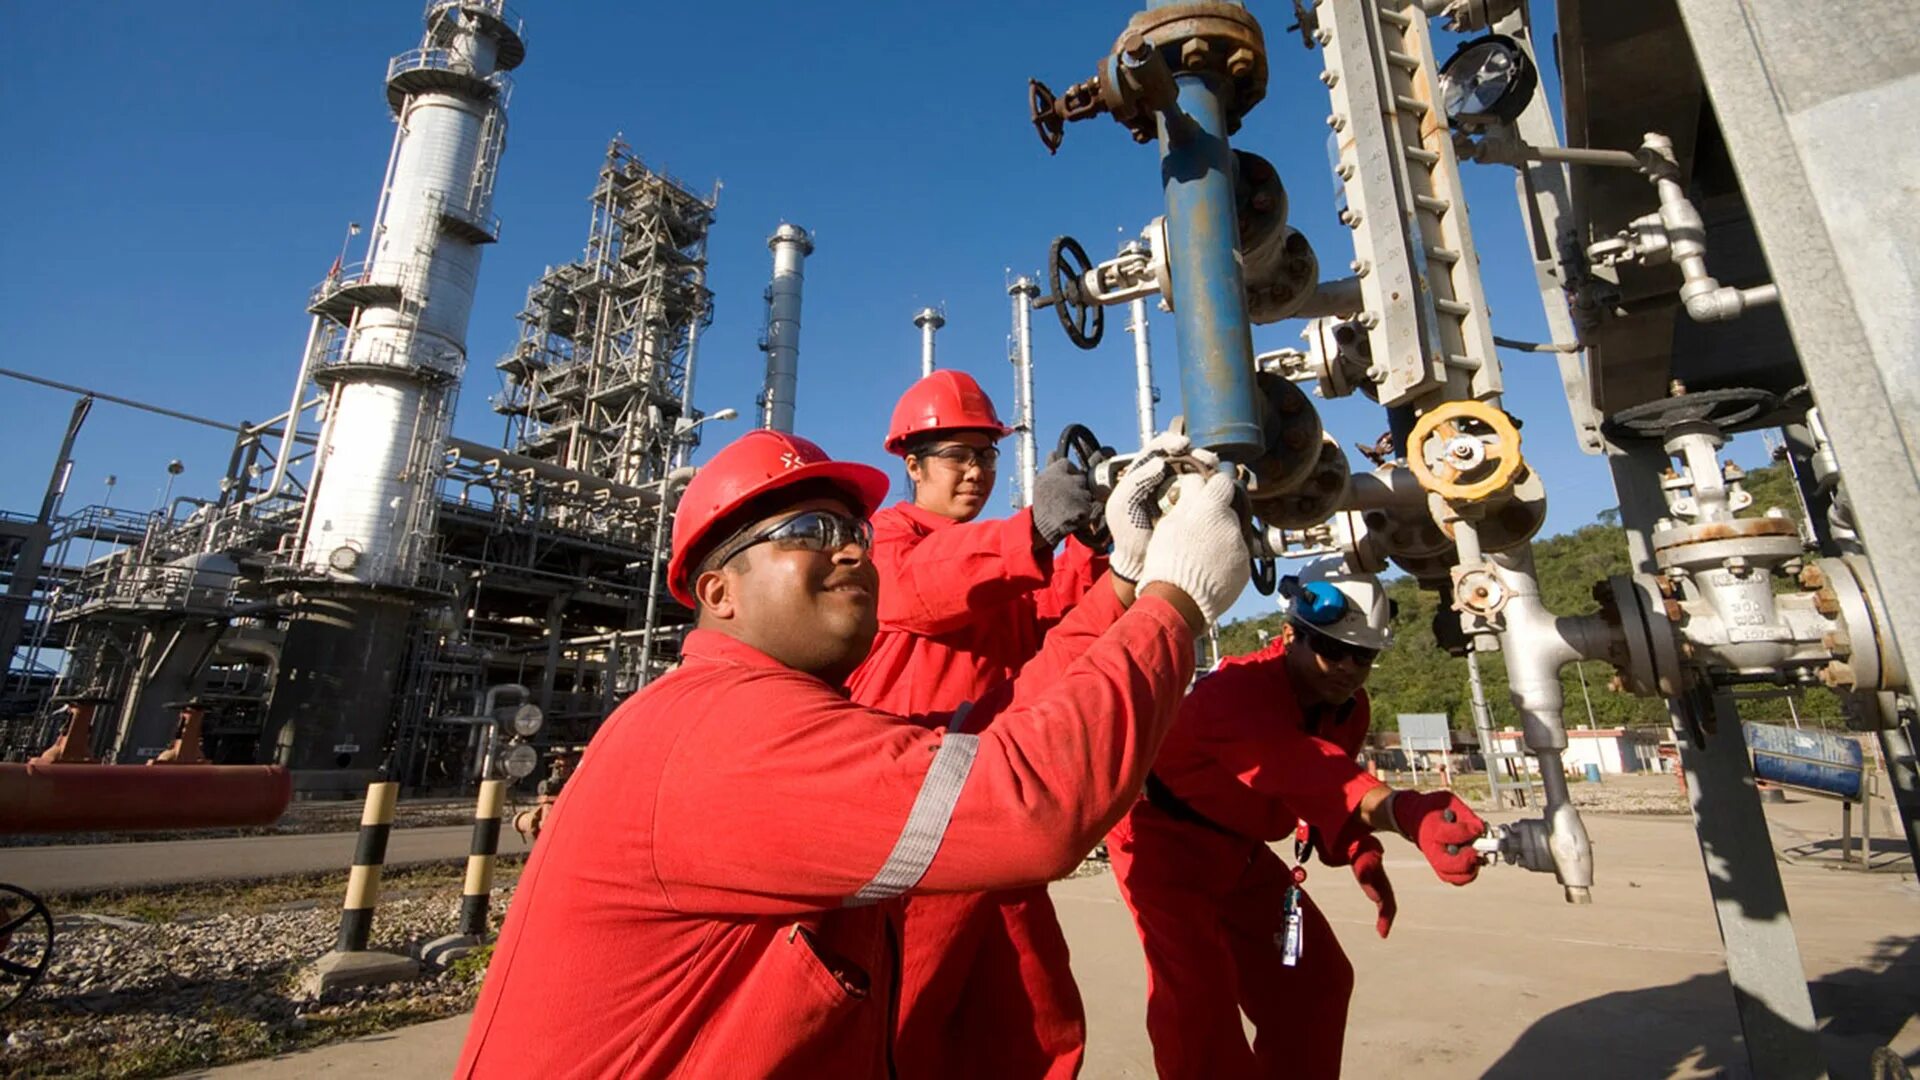 PDVSA Венесуэла. Промышленность Венесуэлы. Венесуэла нефть. Венесуэльская нефтяная компания PDVSA.